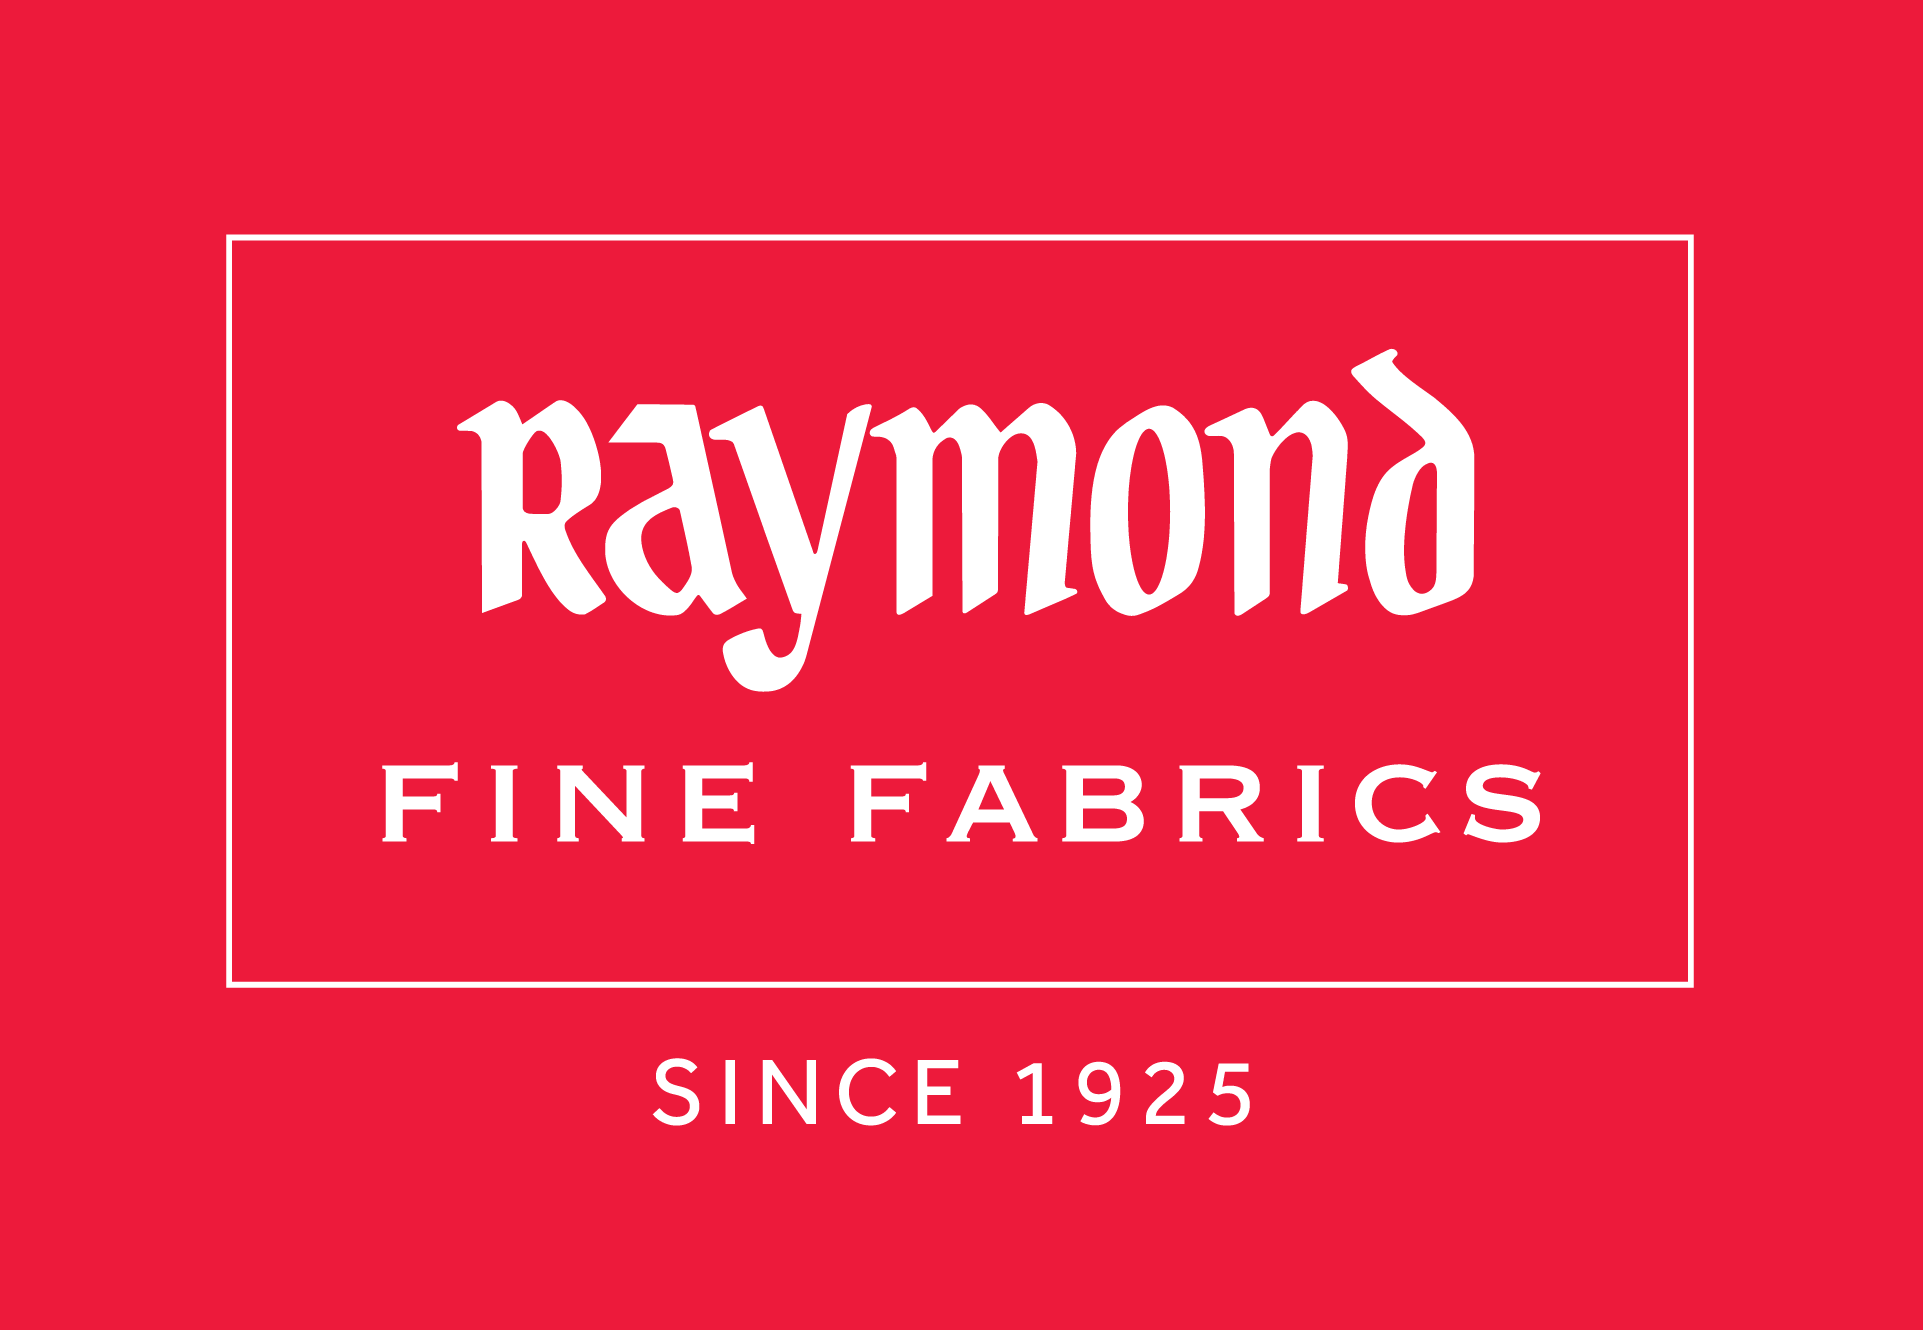 raymond-fine-fabrics.png